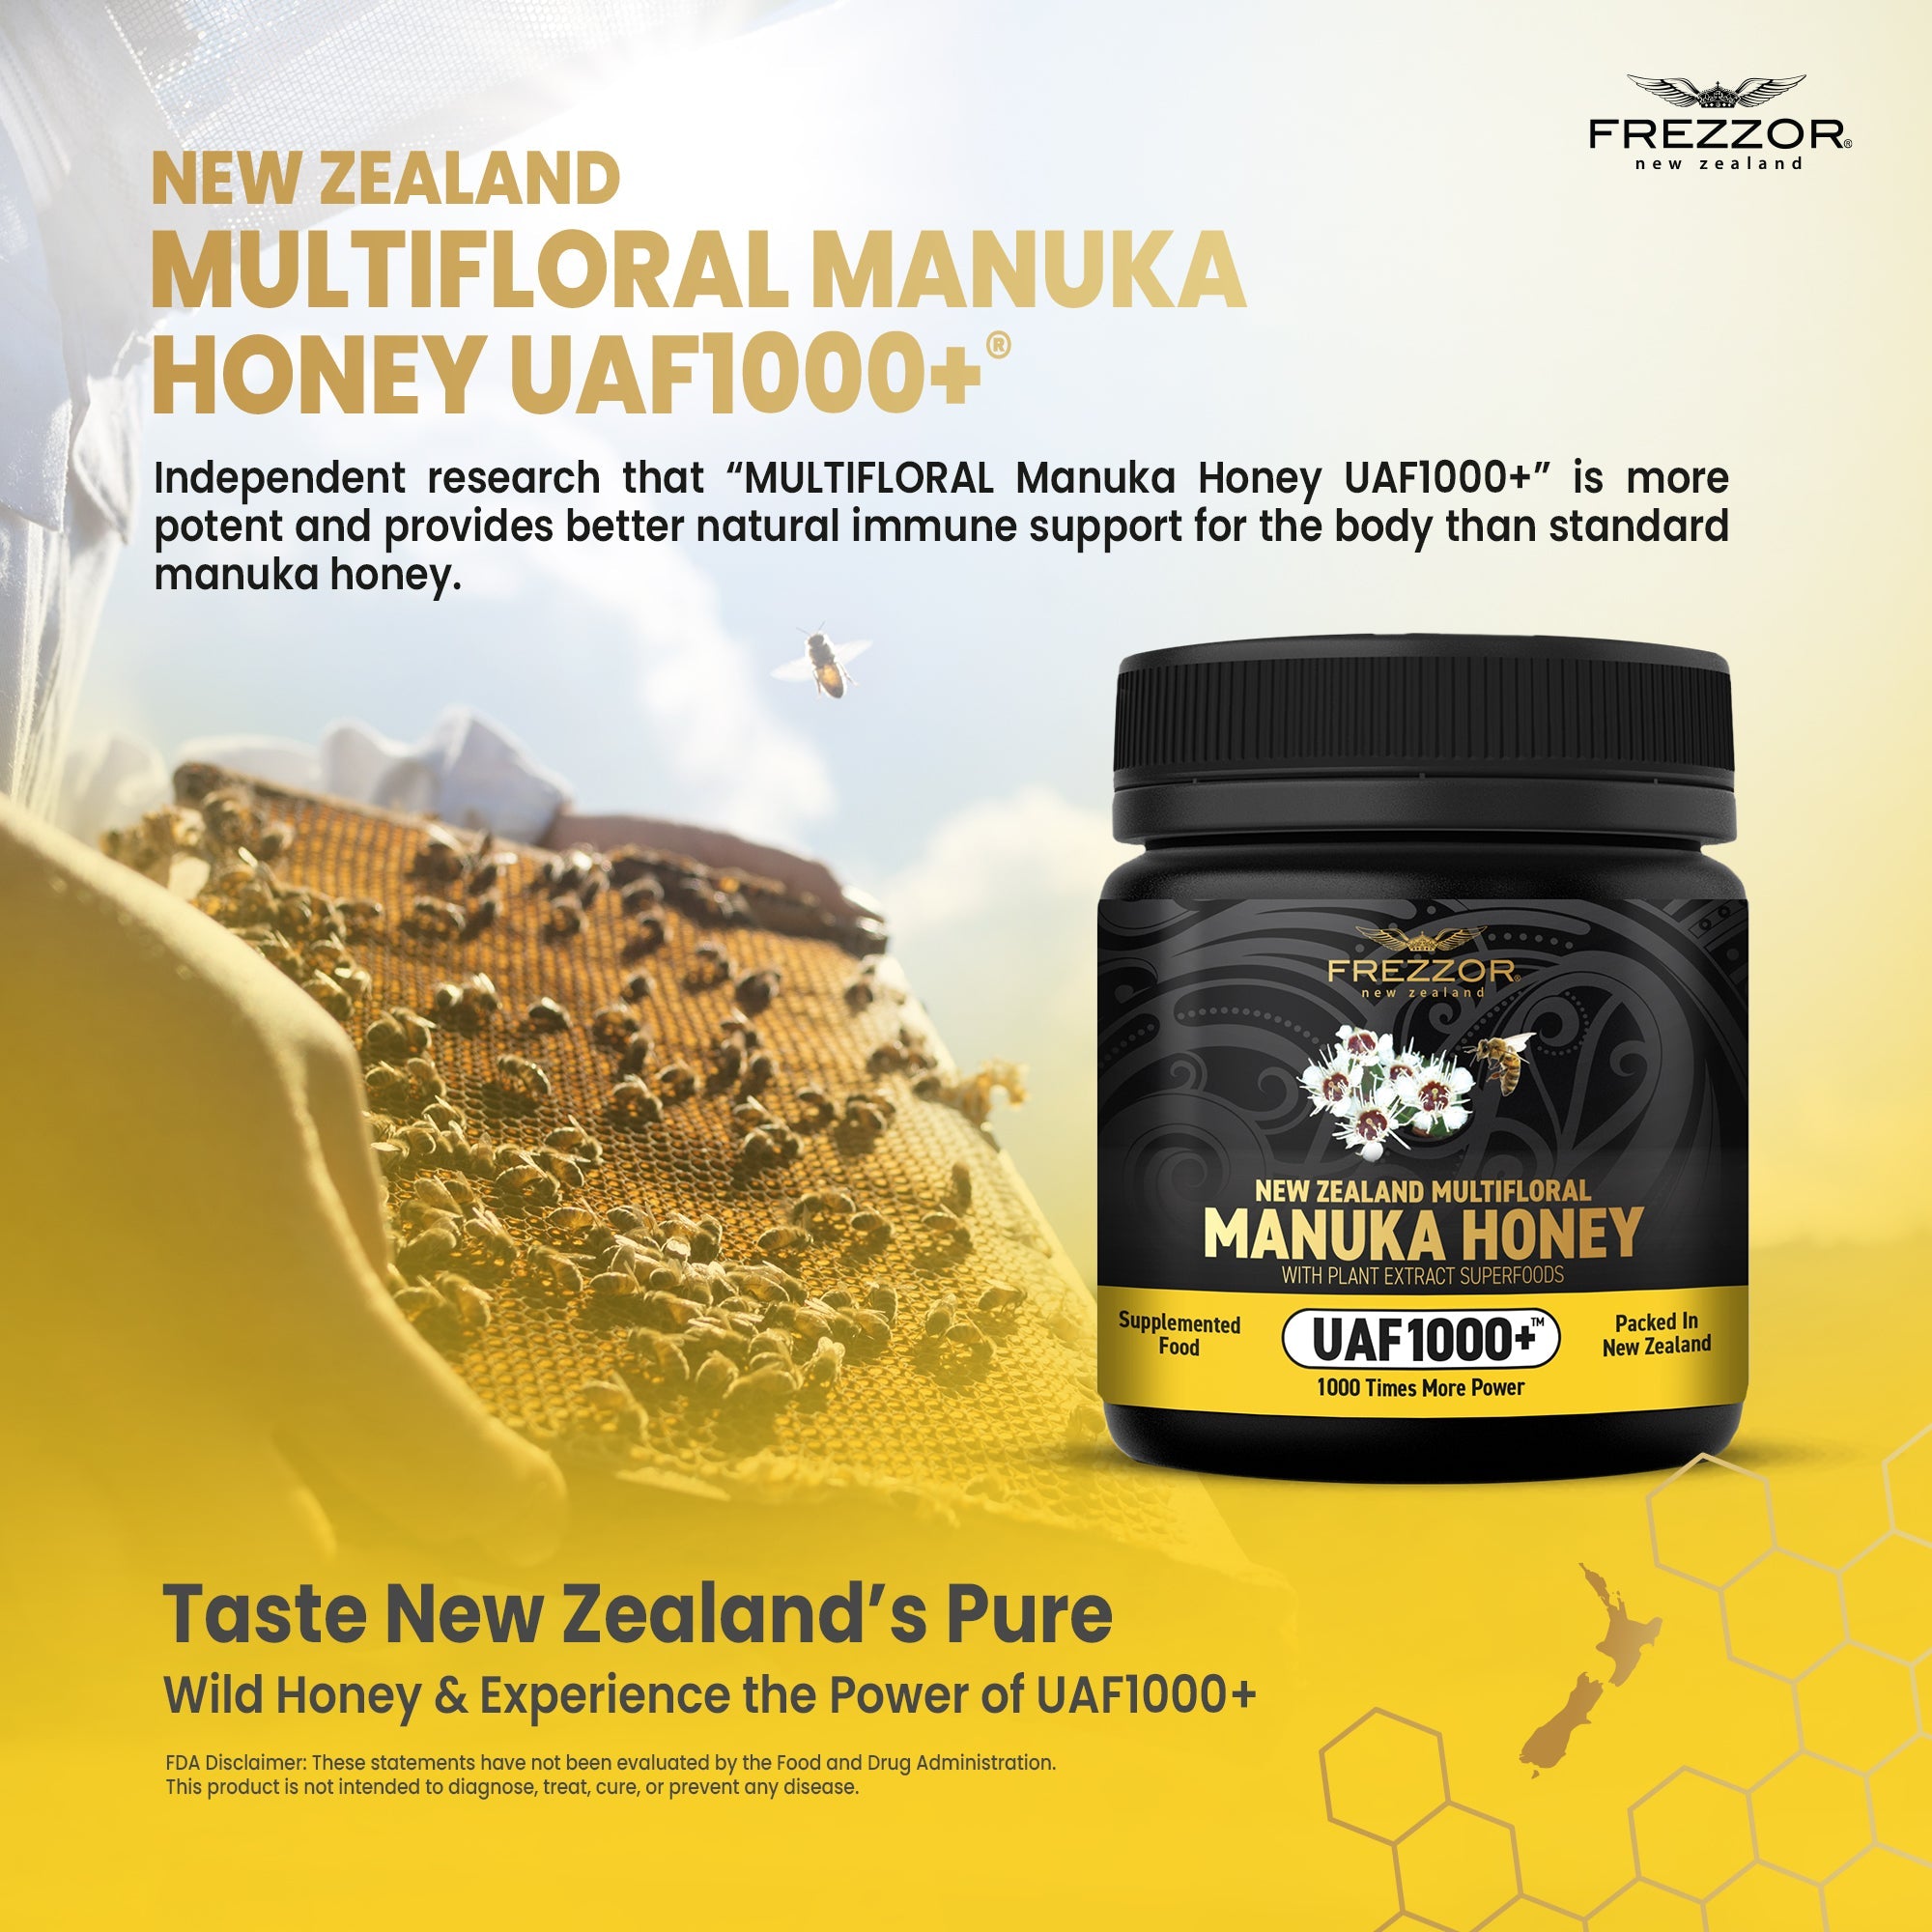 Multifloral Manuka Honey UAF1000+